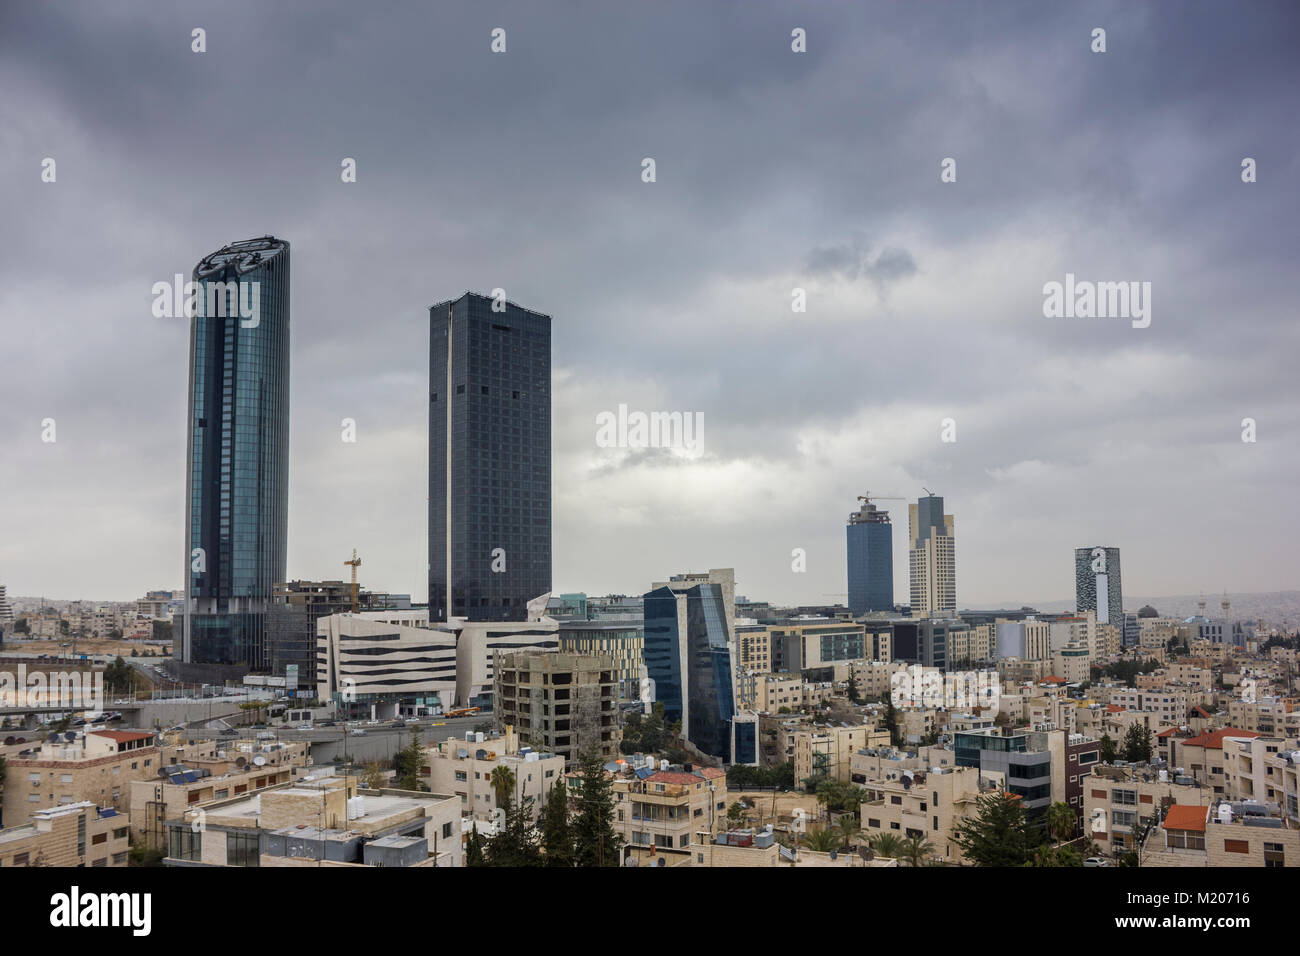 the downtown of Amman abdali area - Jordan Amman city View of modern buildings in Amman at night Stock Photo - Alamy